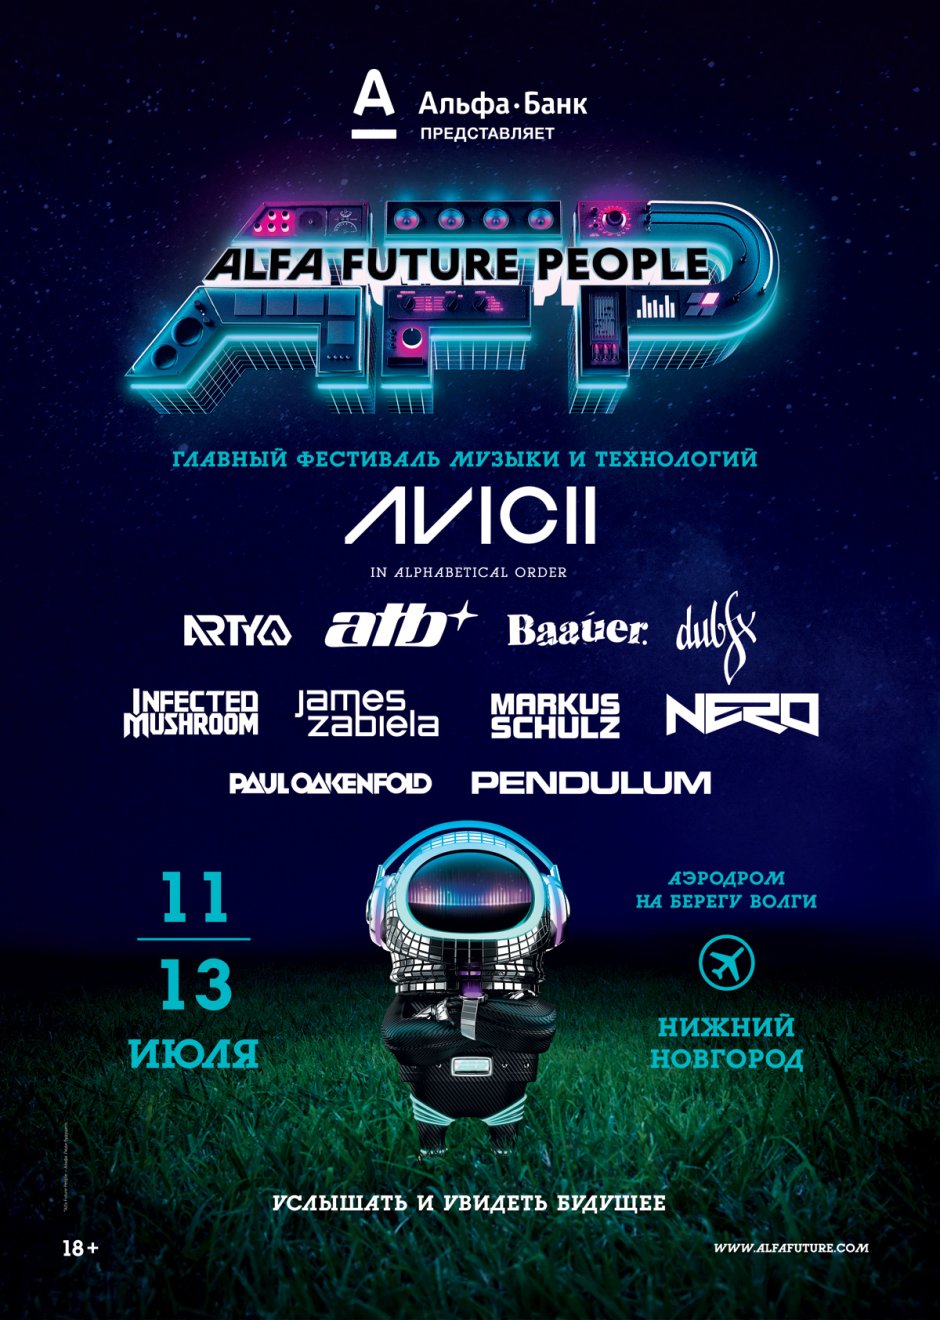 Alfa Future people 2014